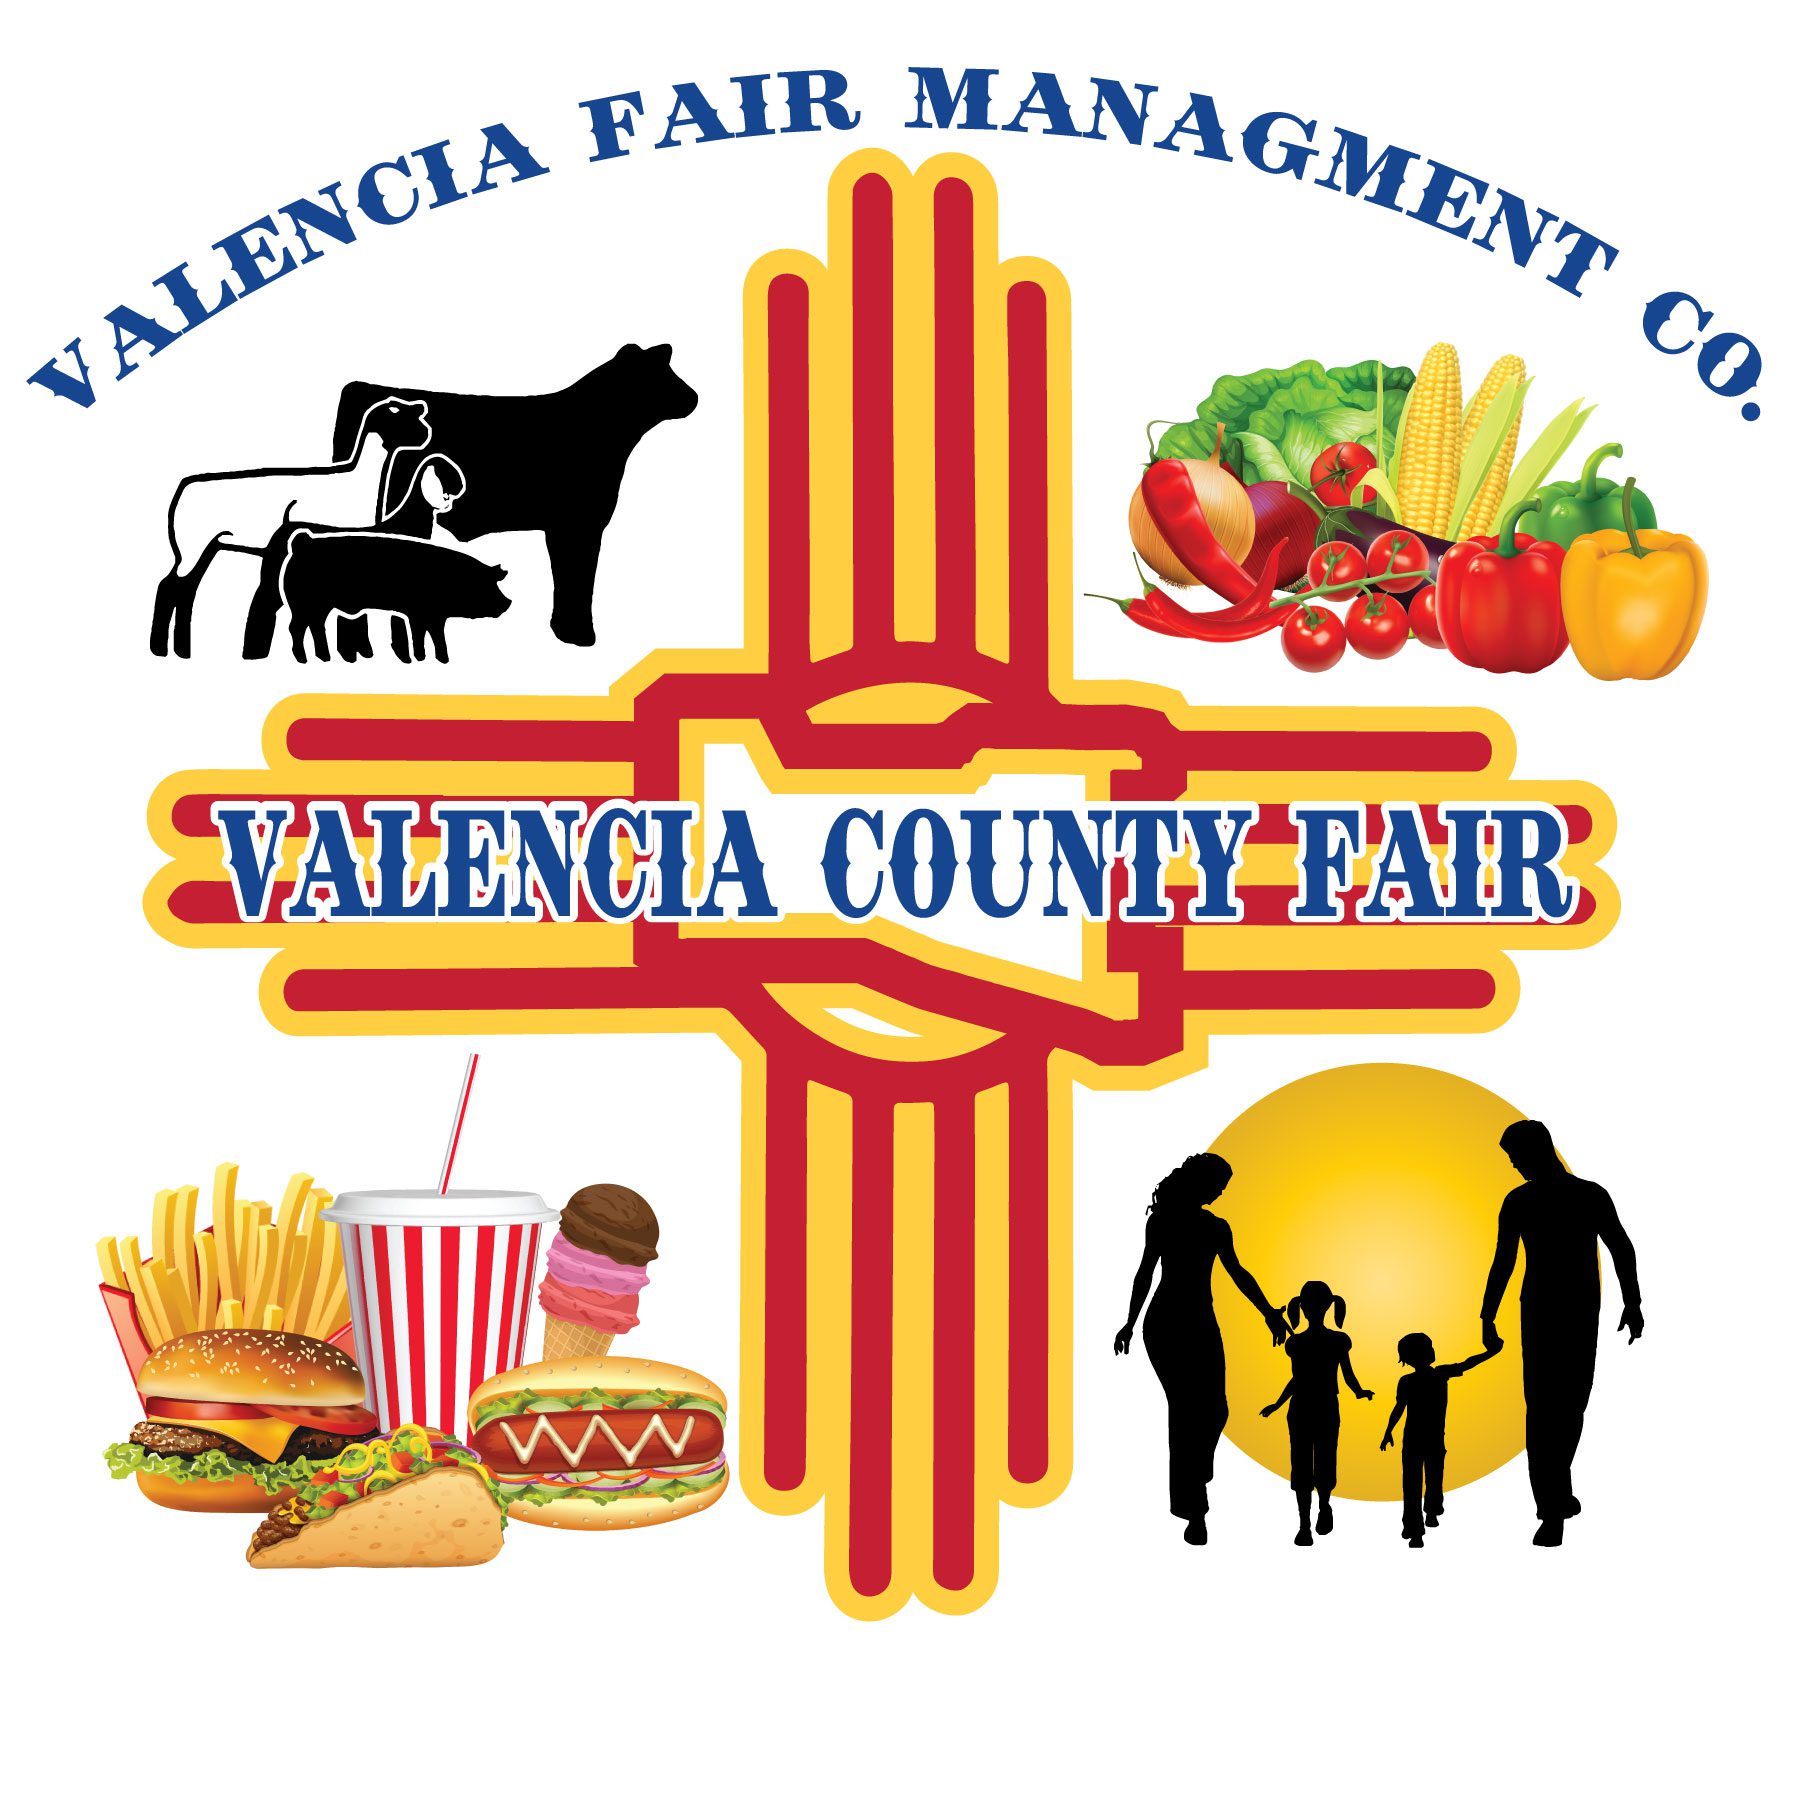 Valencia Fair Management Company